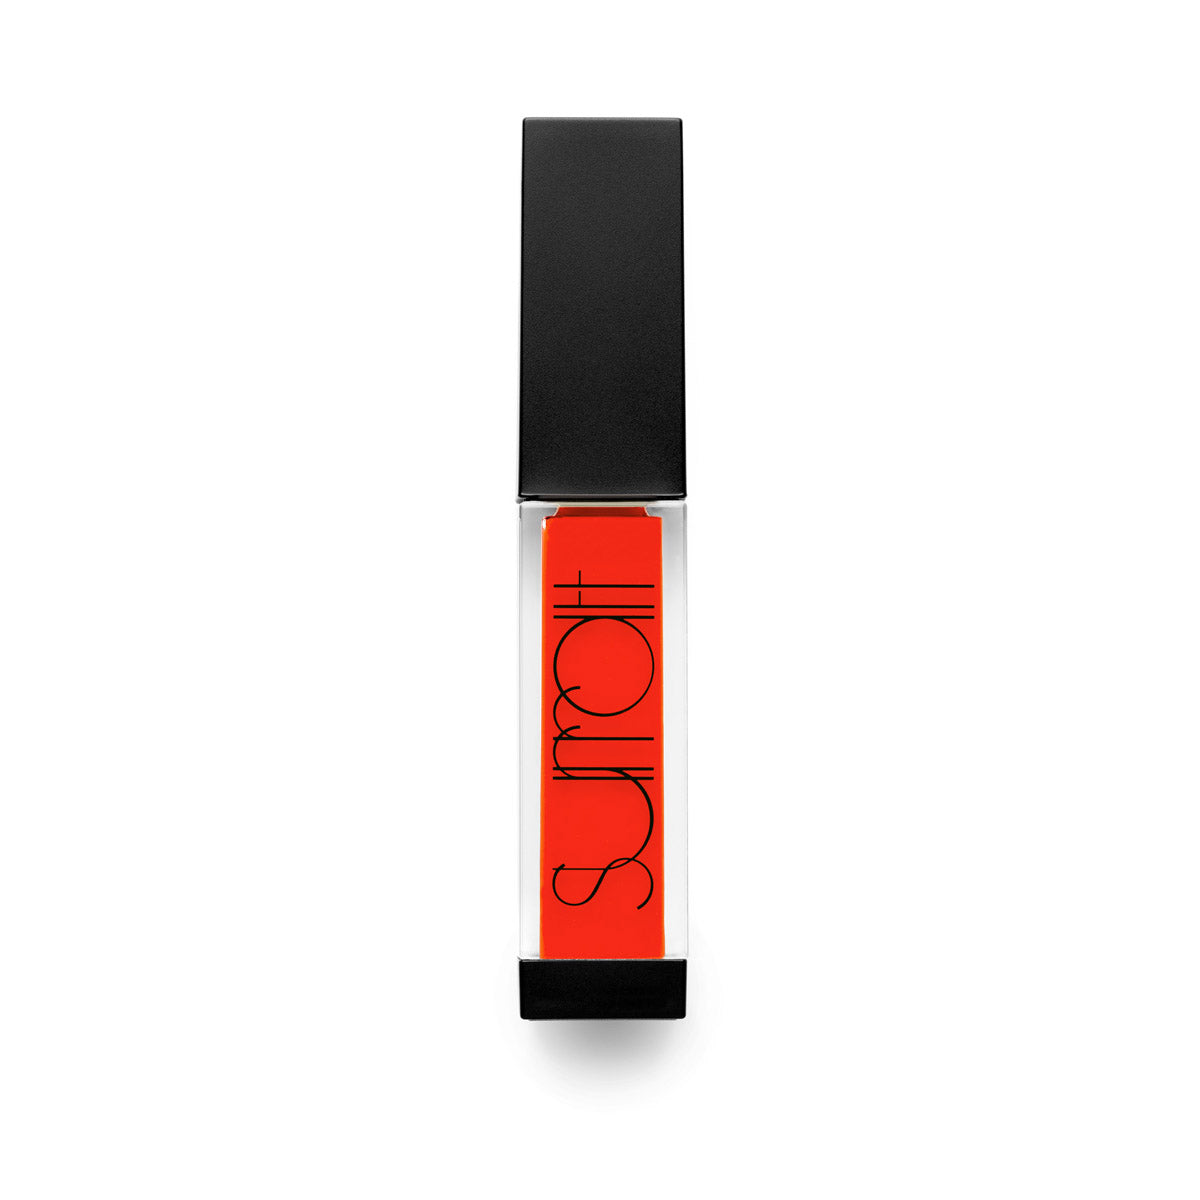 FLAMANT - BRIGHT CORAL - high shine lip gloss in bright coral shade